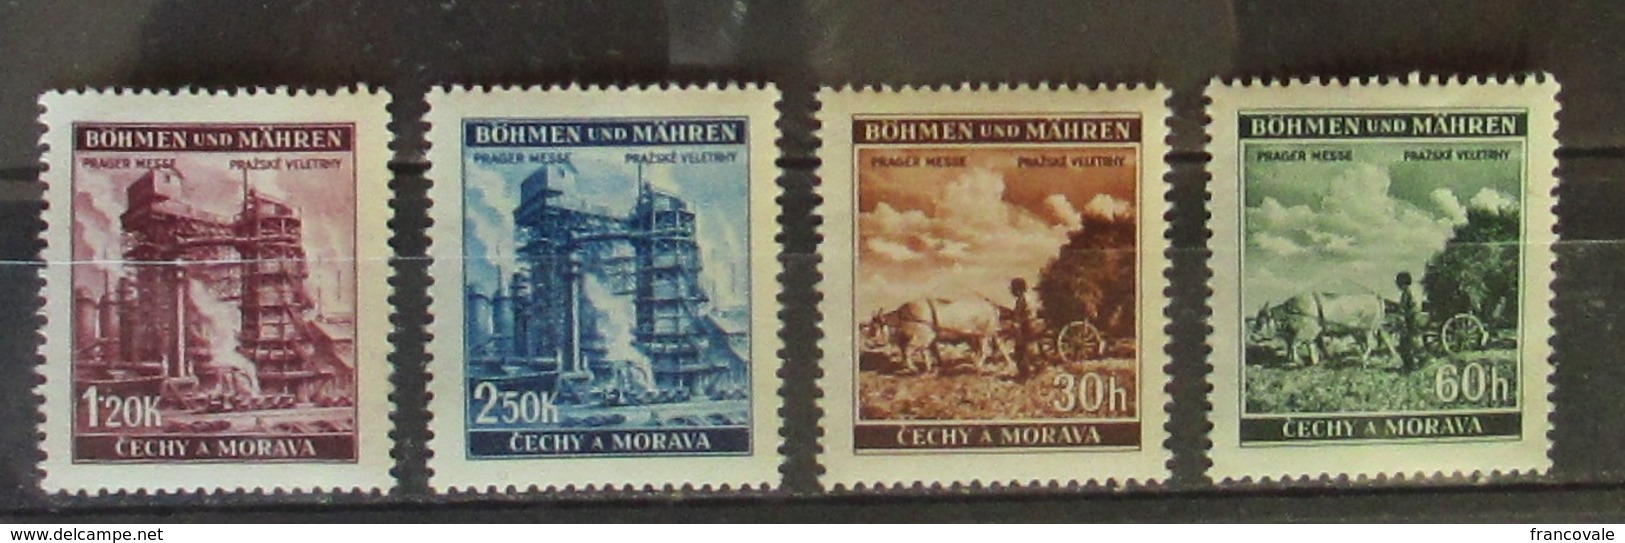 Germania Occupazione  1939 Bohmen Und Mahren 4 Stamps Industry Agriculture MNH - Unused Stamps